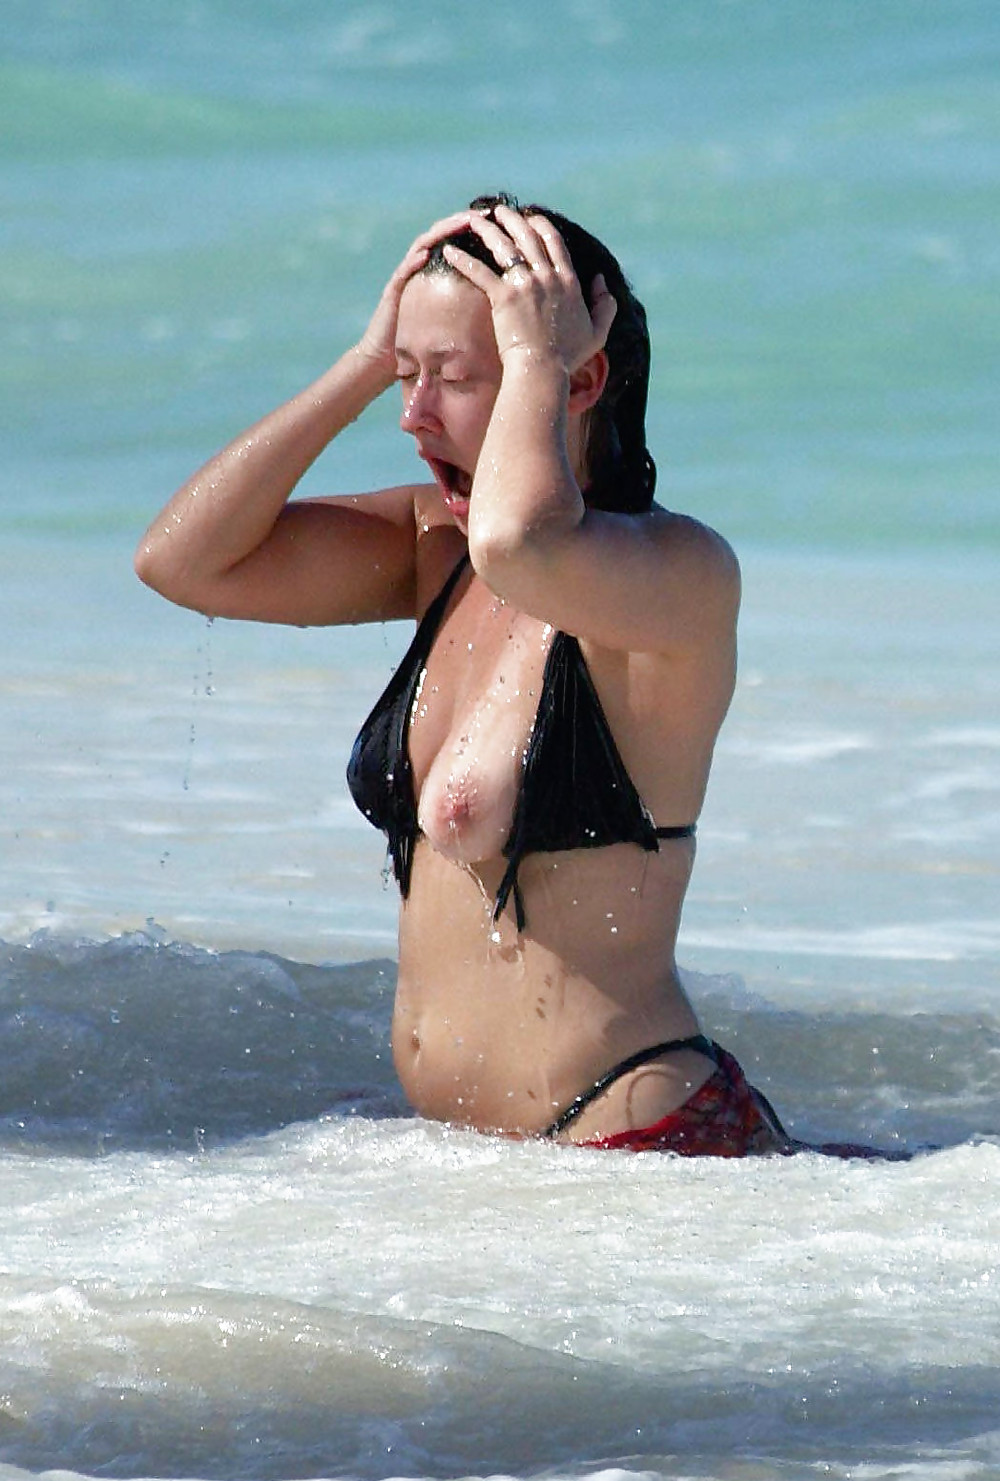 Bikini oop nip slip at beach